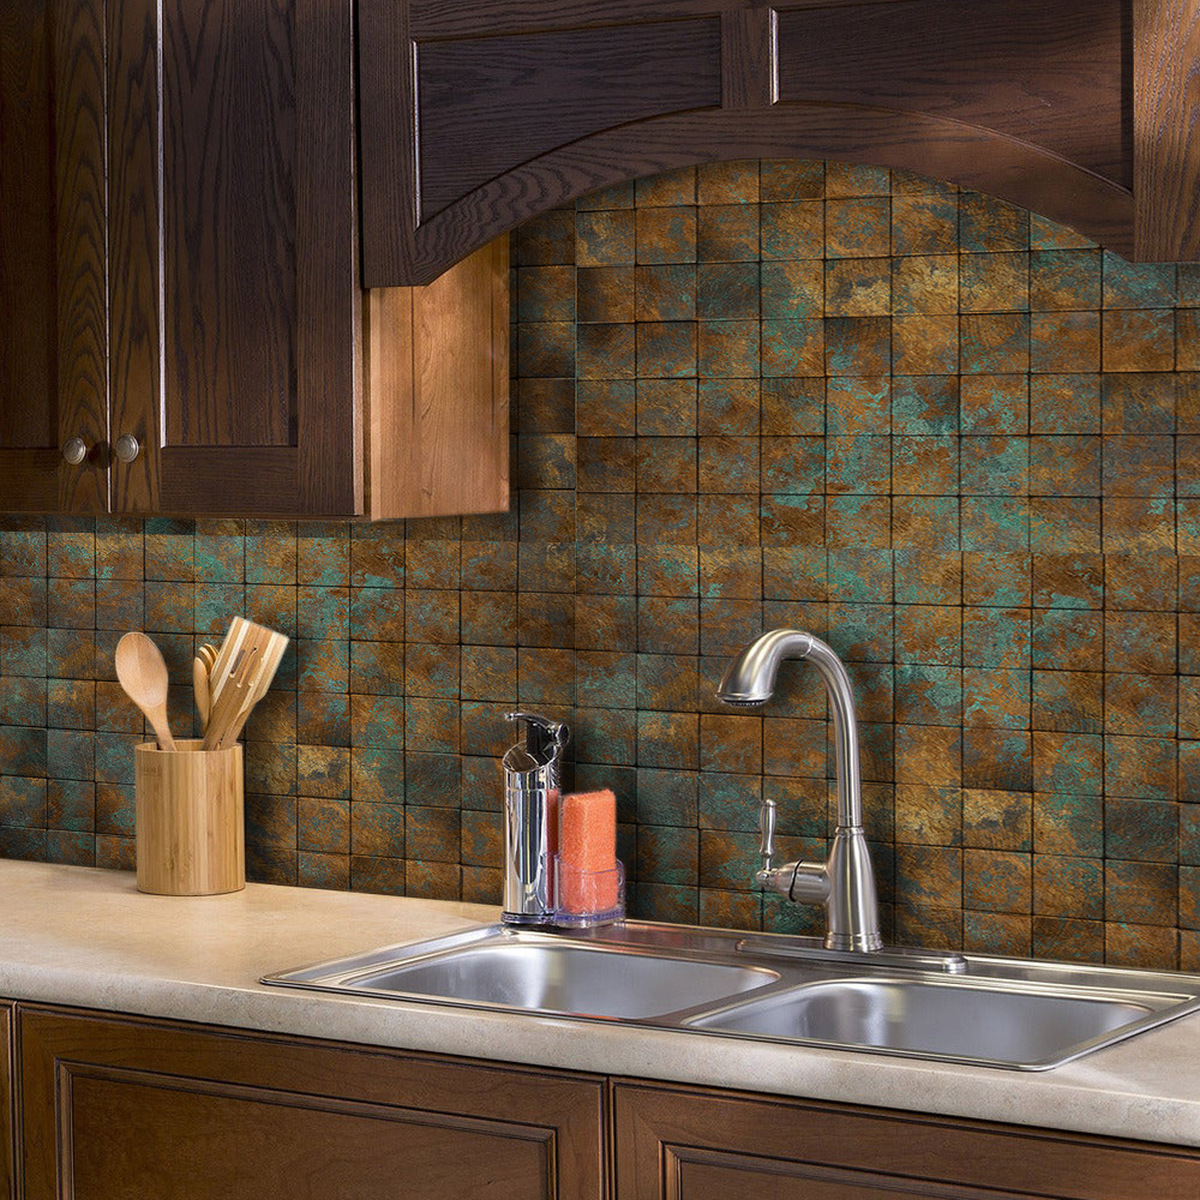 40x60cm Self-Adhesive Wallpaper Removable Ceiling Tile Kitchen Oilproof Decals Waterproof Backsplash Peel & Stick Tile